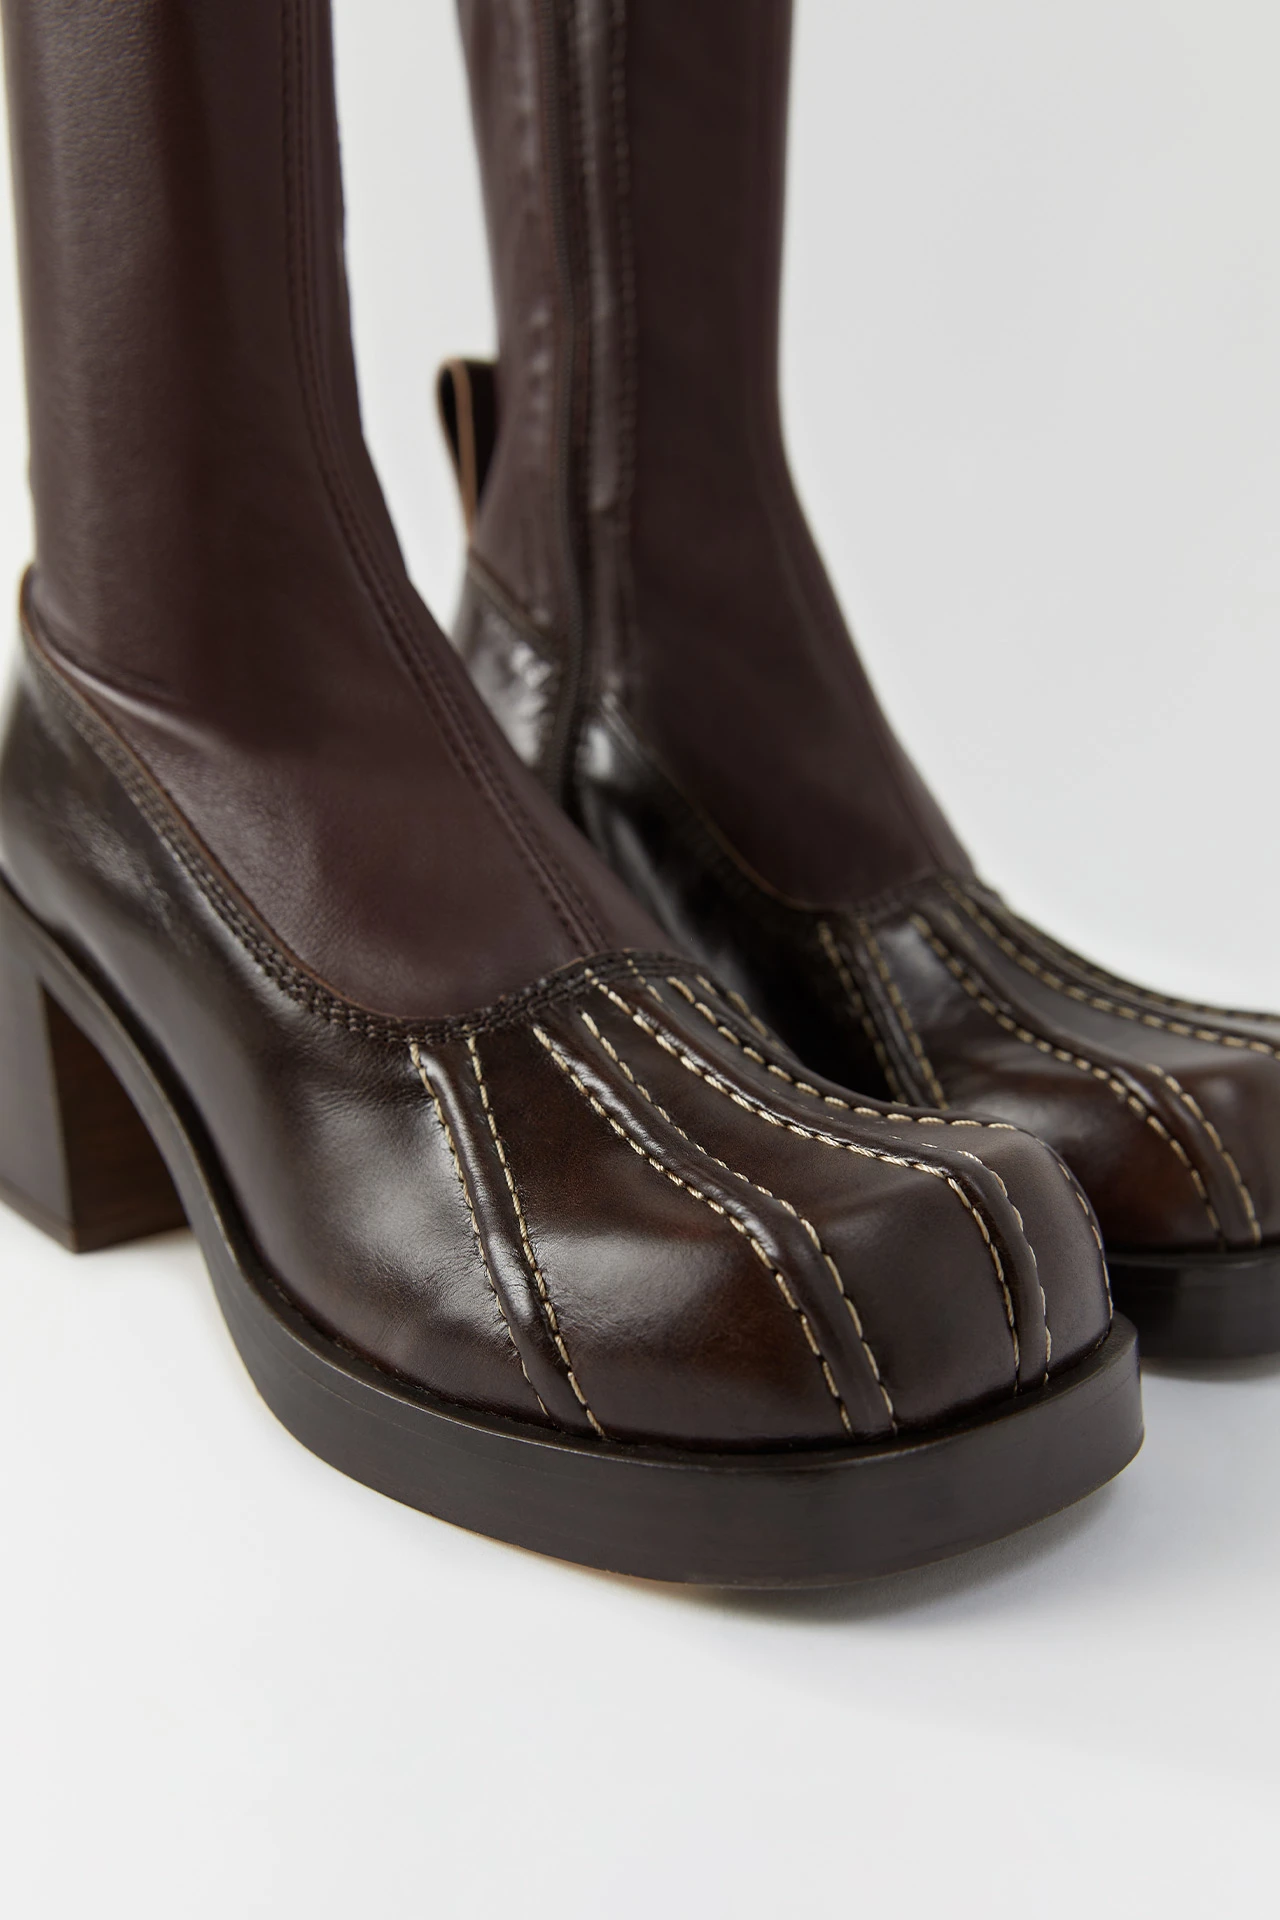 miista-mako-brown-boots-3